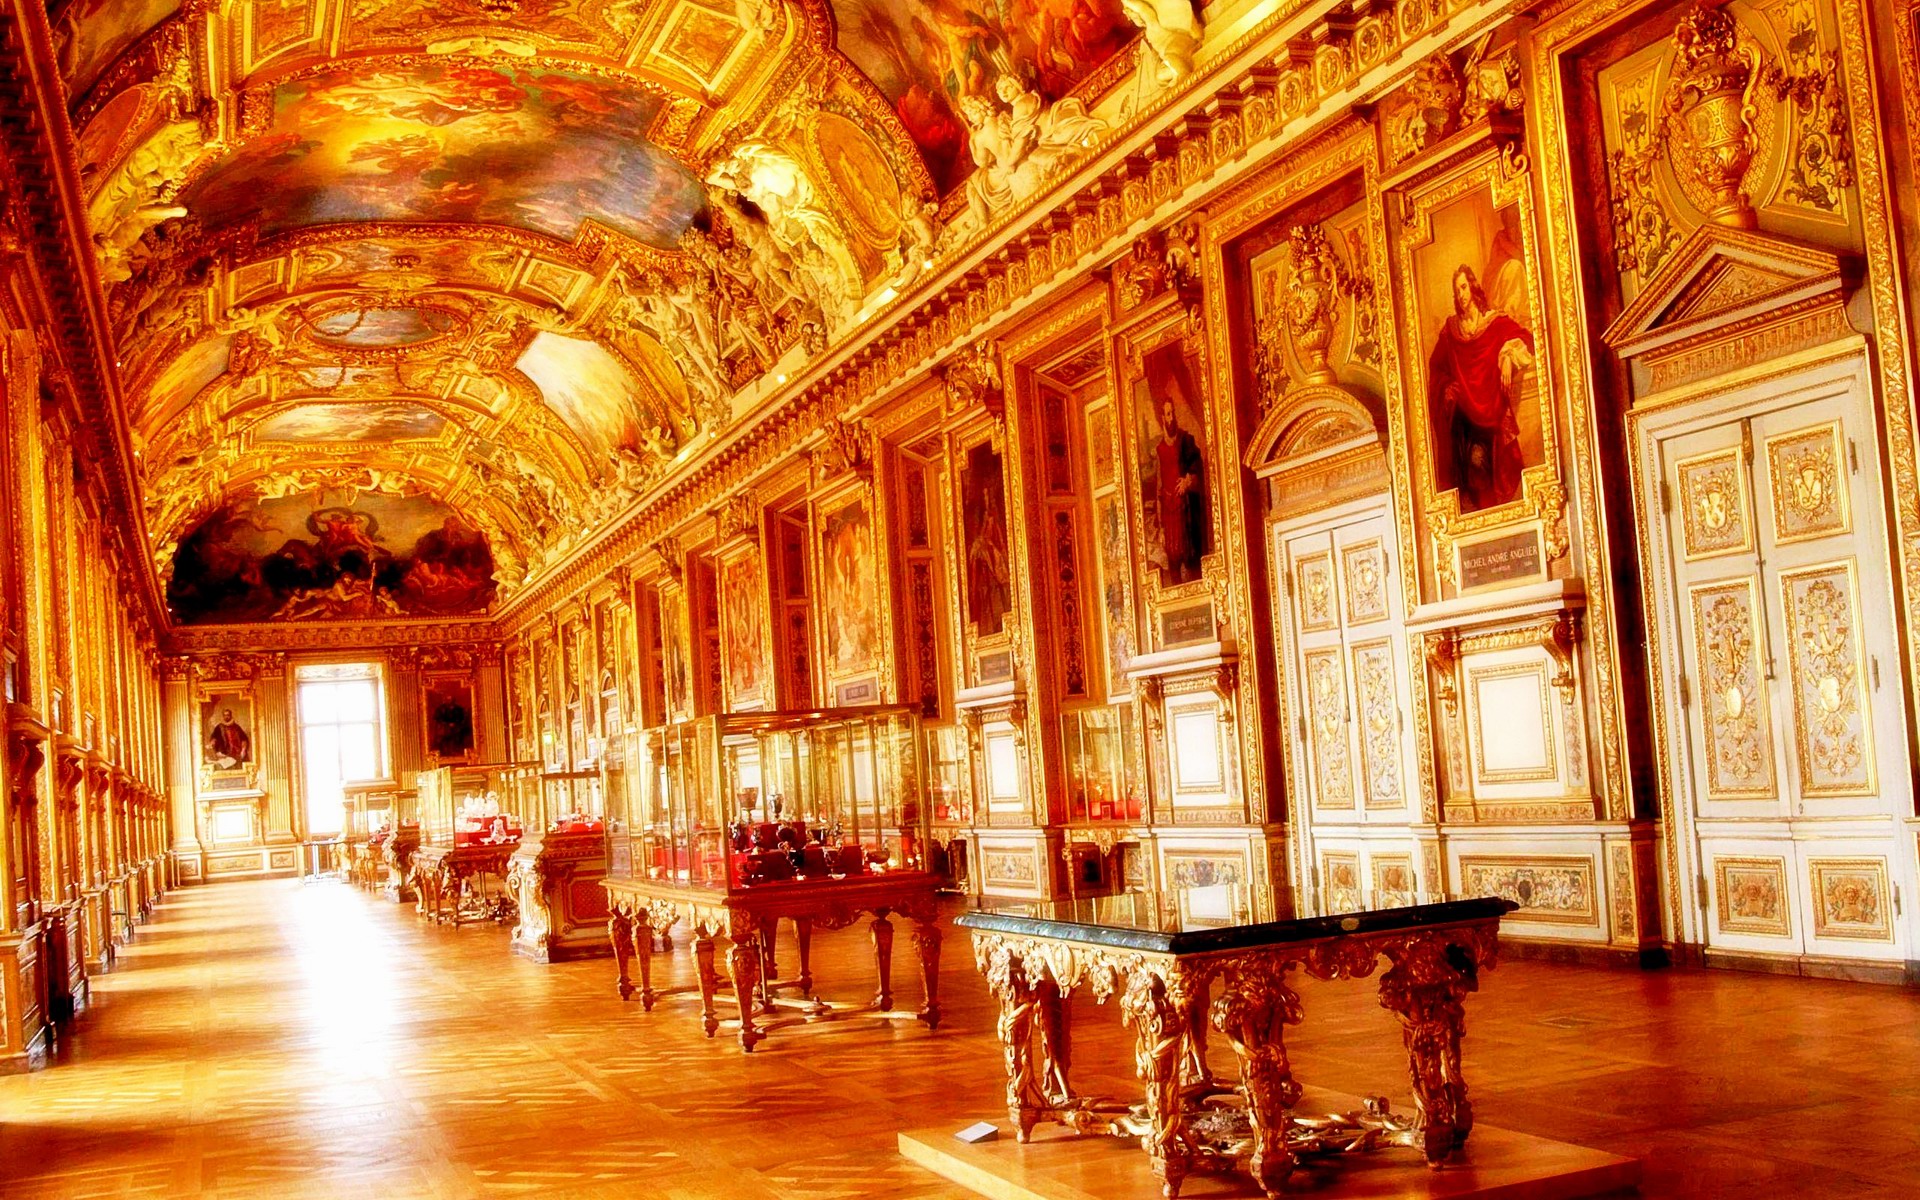 [51+] Wallpaper Inside Louvre on WallpaperSafari